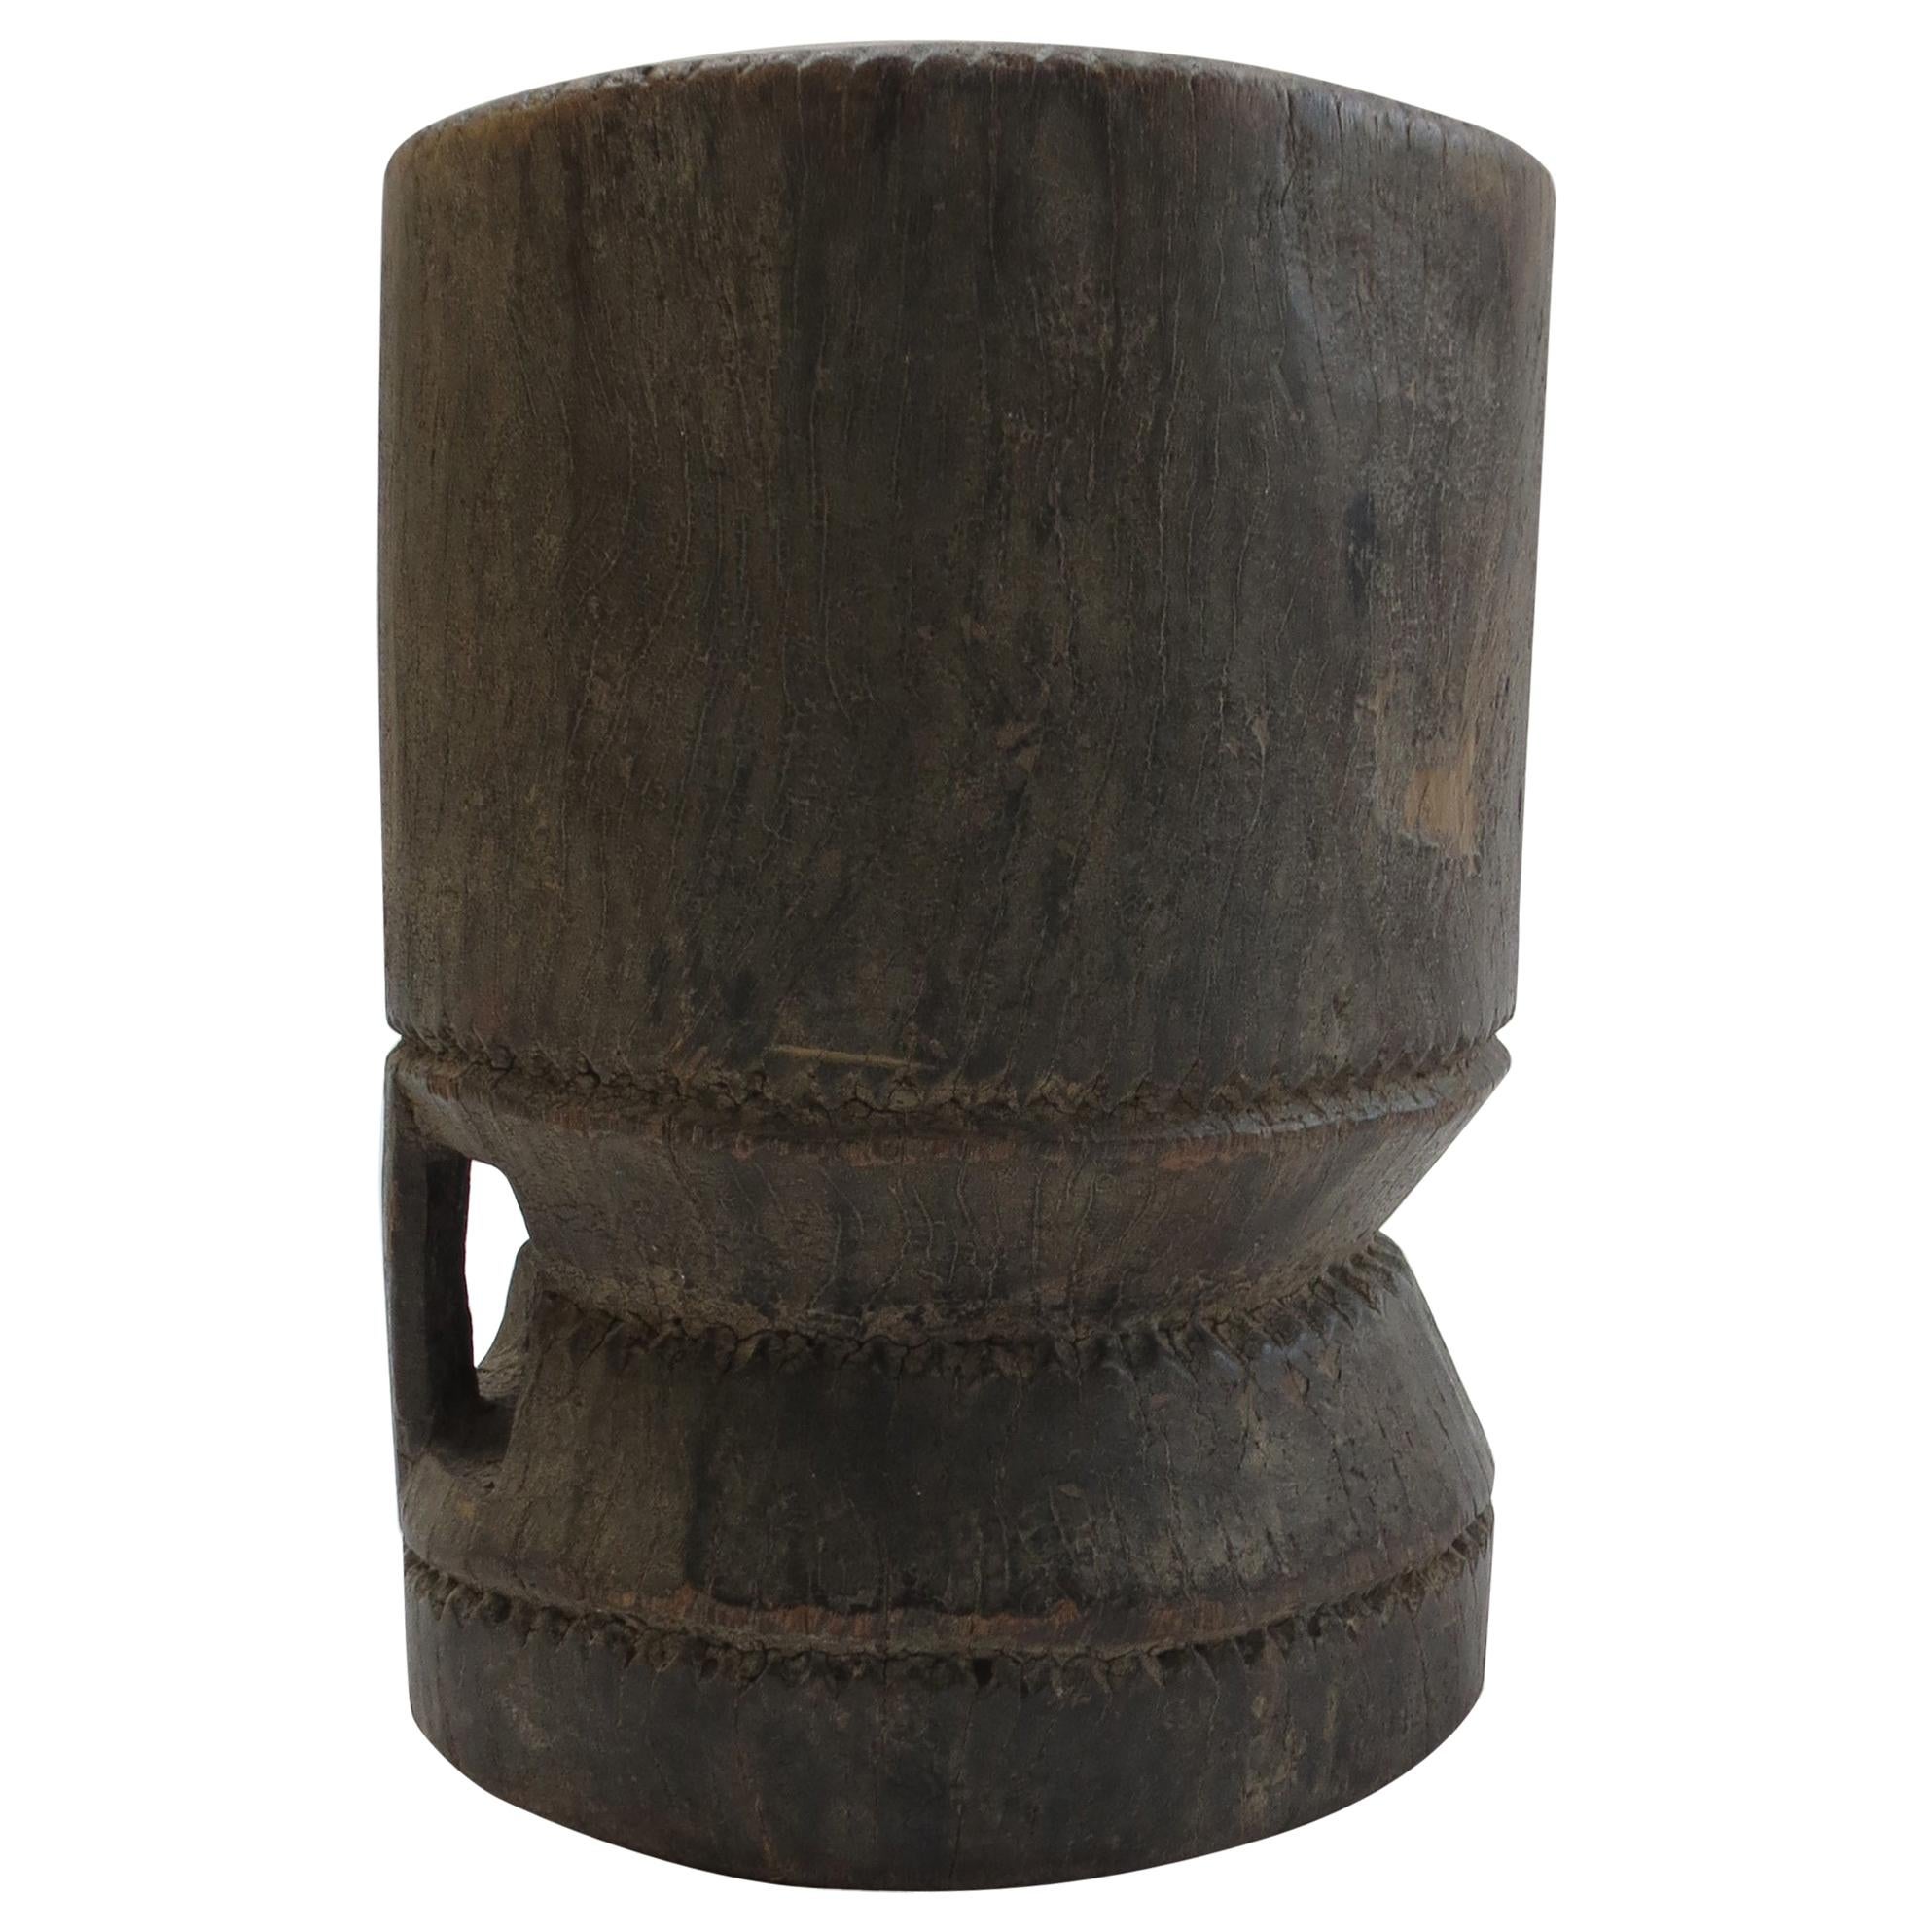 Vintage African Tribal Wooden Mortar Stool